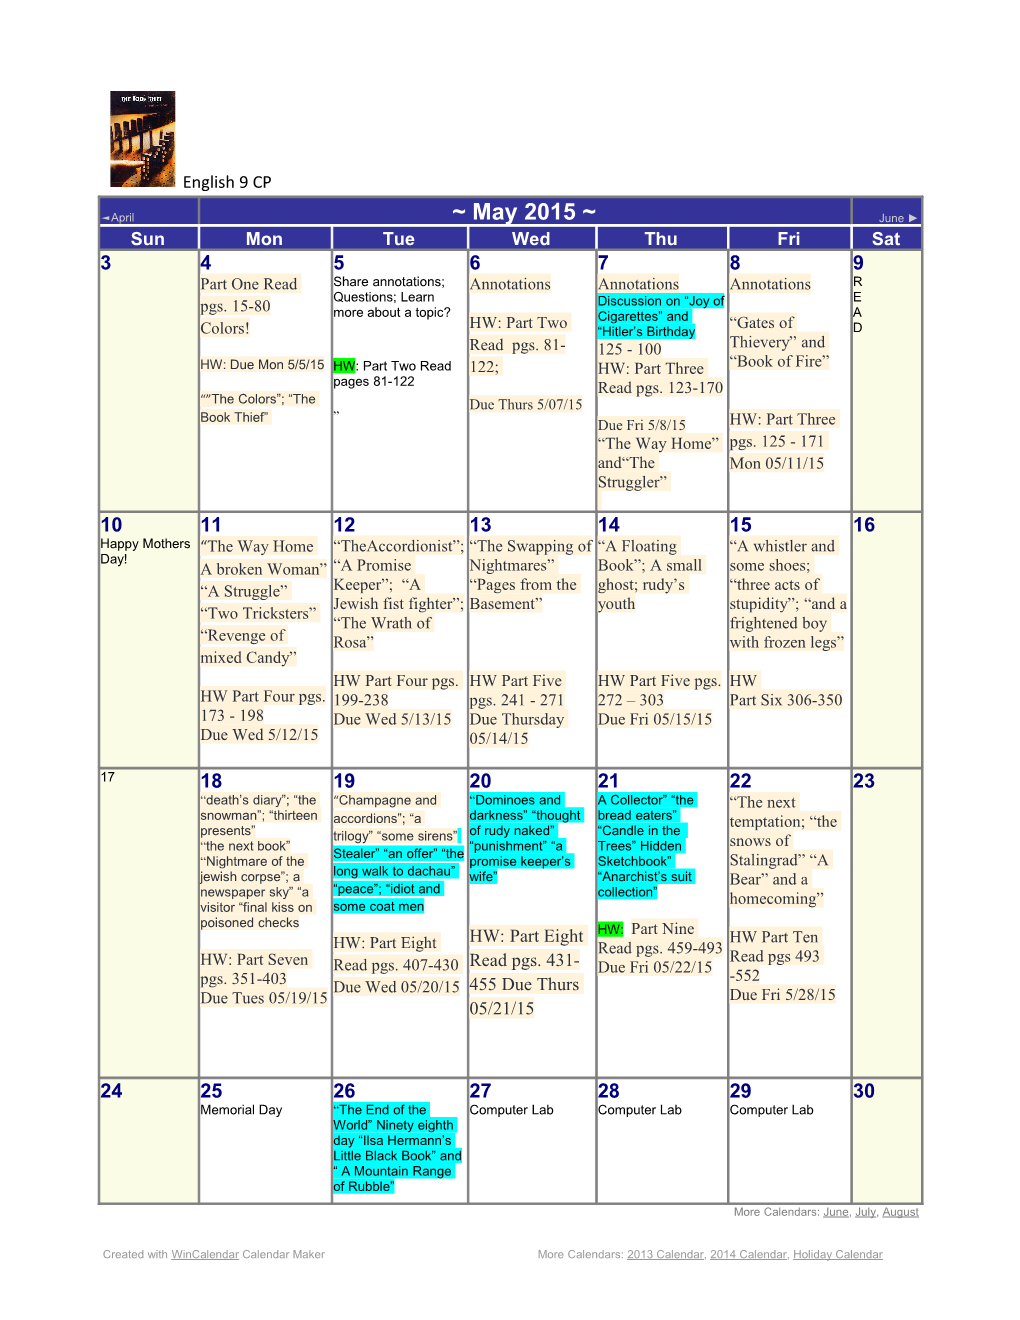 Created with Wincalendar Calendar Maker More Calendars: 2013 Calendar, 2014 Calendar, Holiday s1